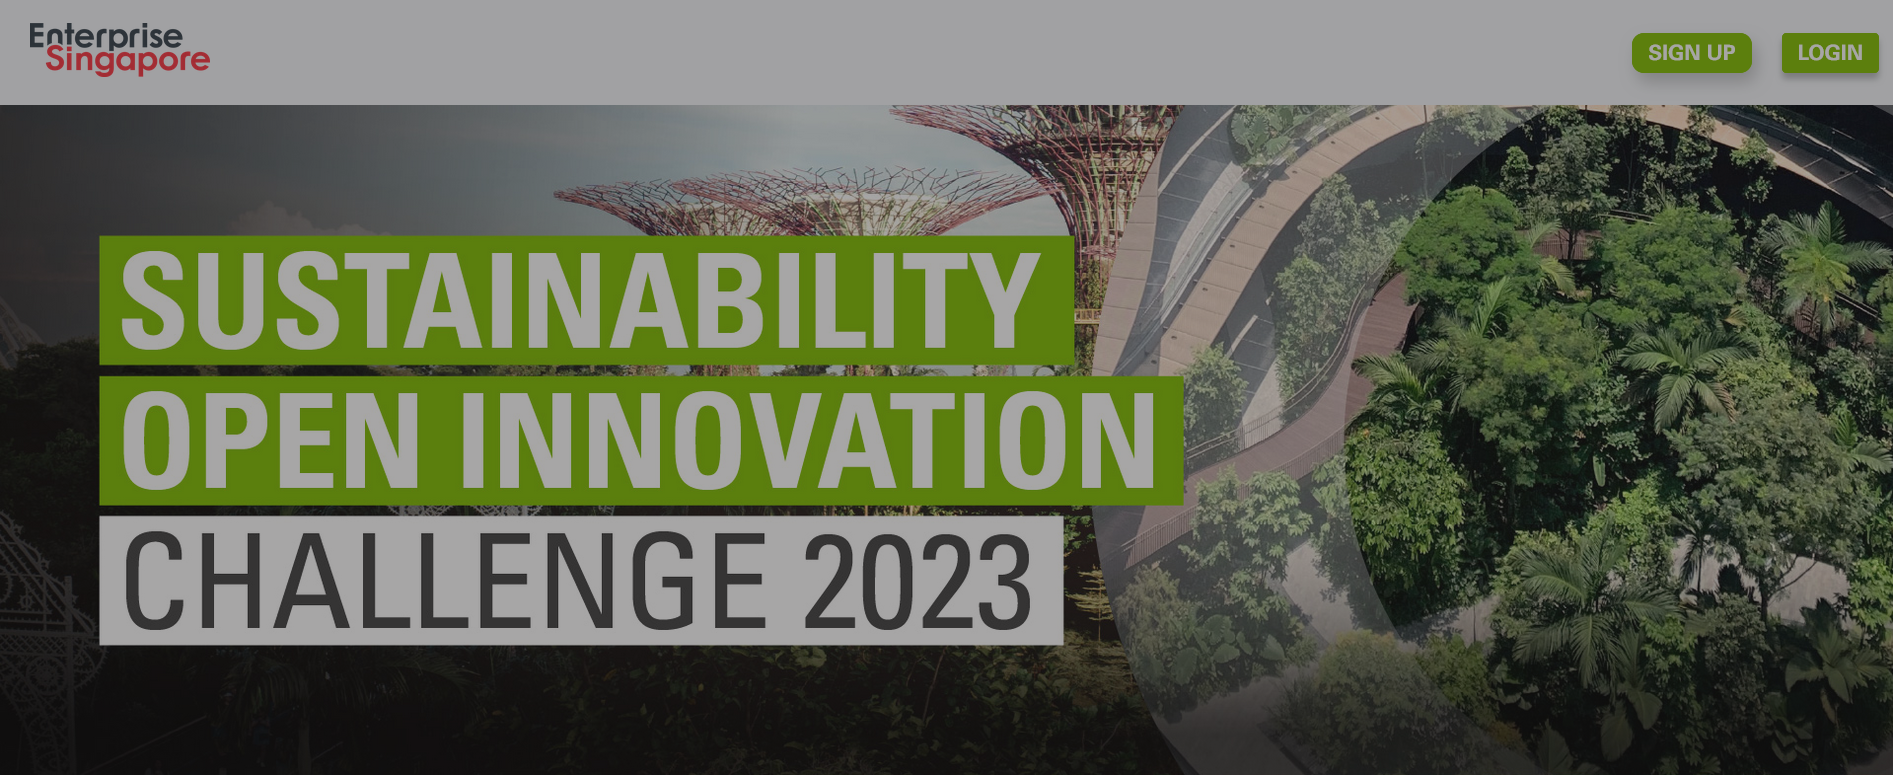 Enterprise Singapore Sustainability Open Innovation Challenge 2023